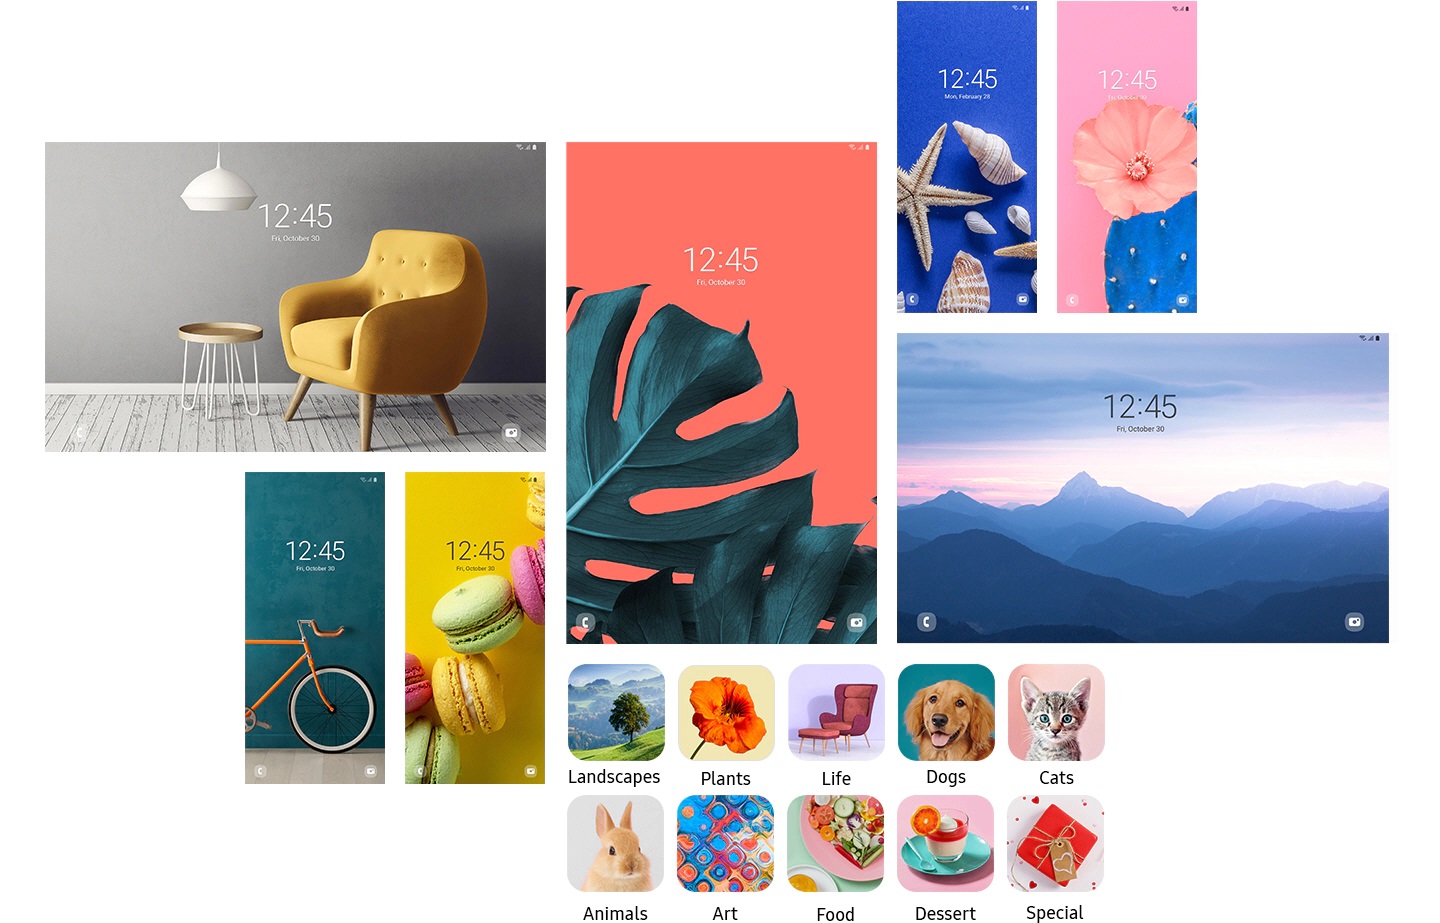 Samsung One UI 3.0 Dynamic Lock Screen